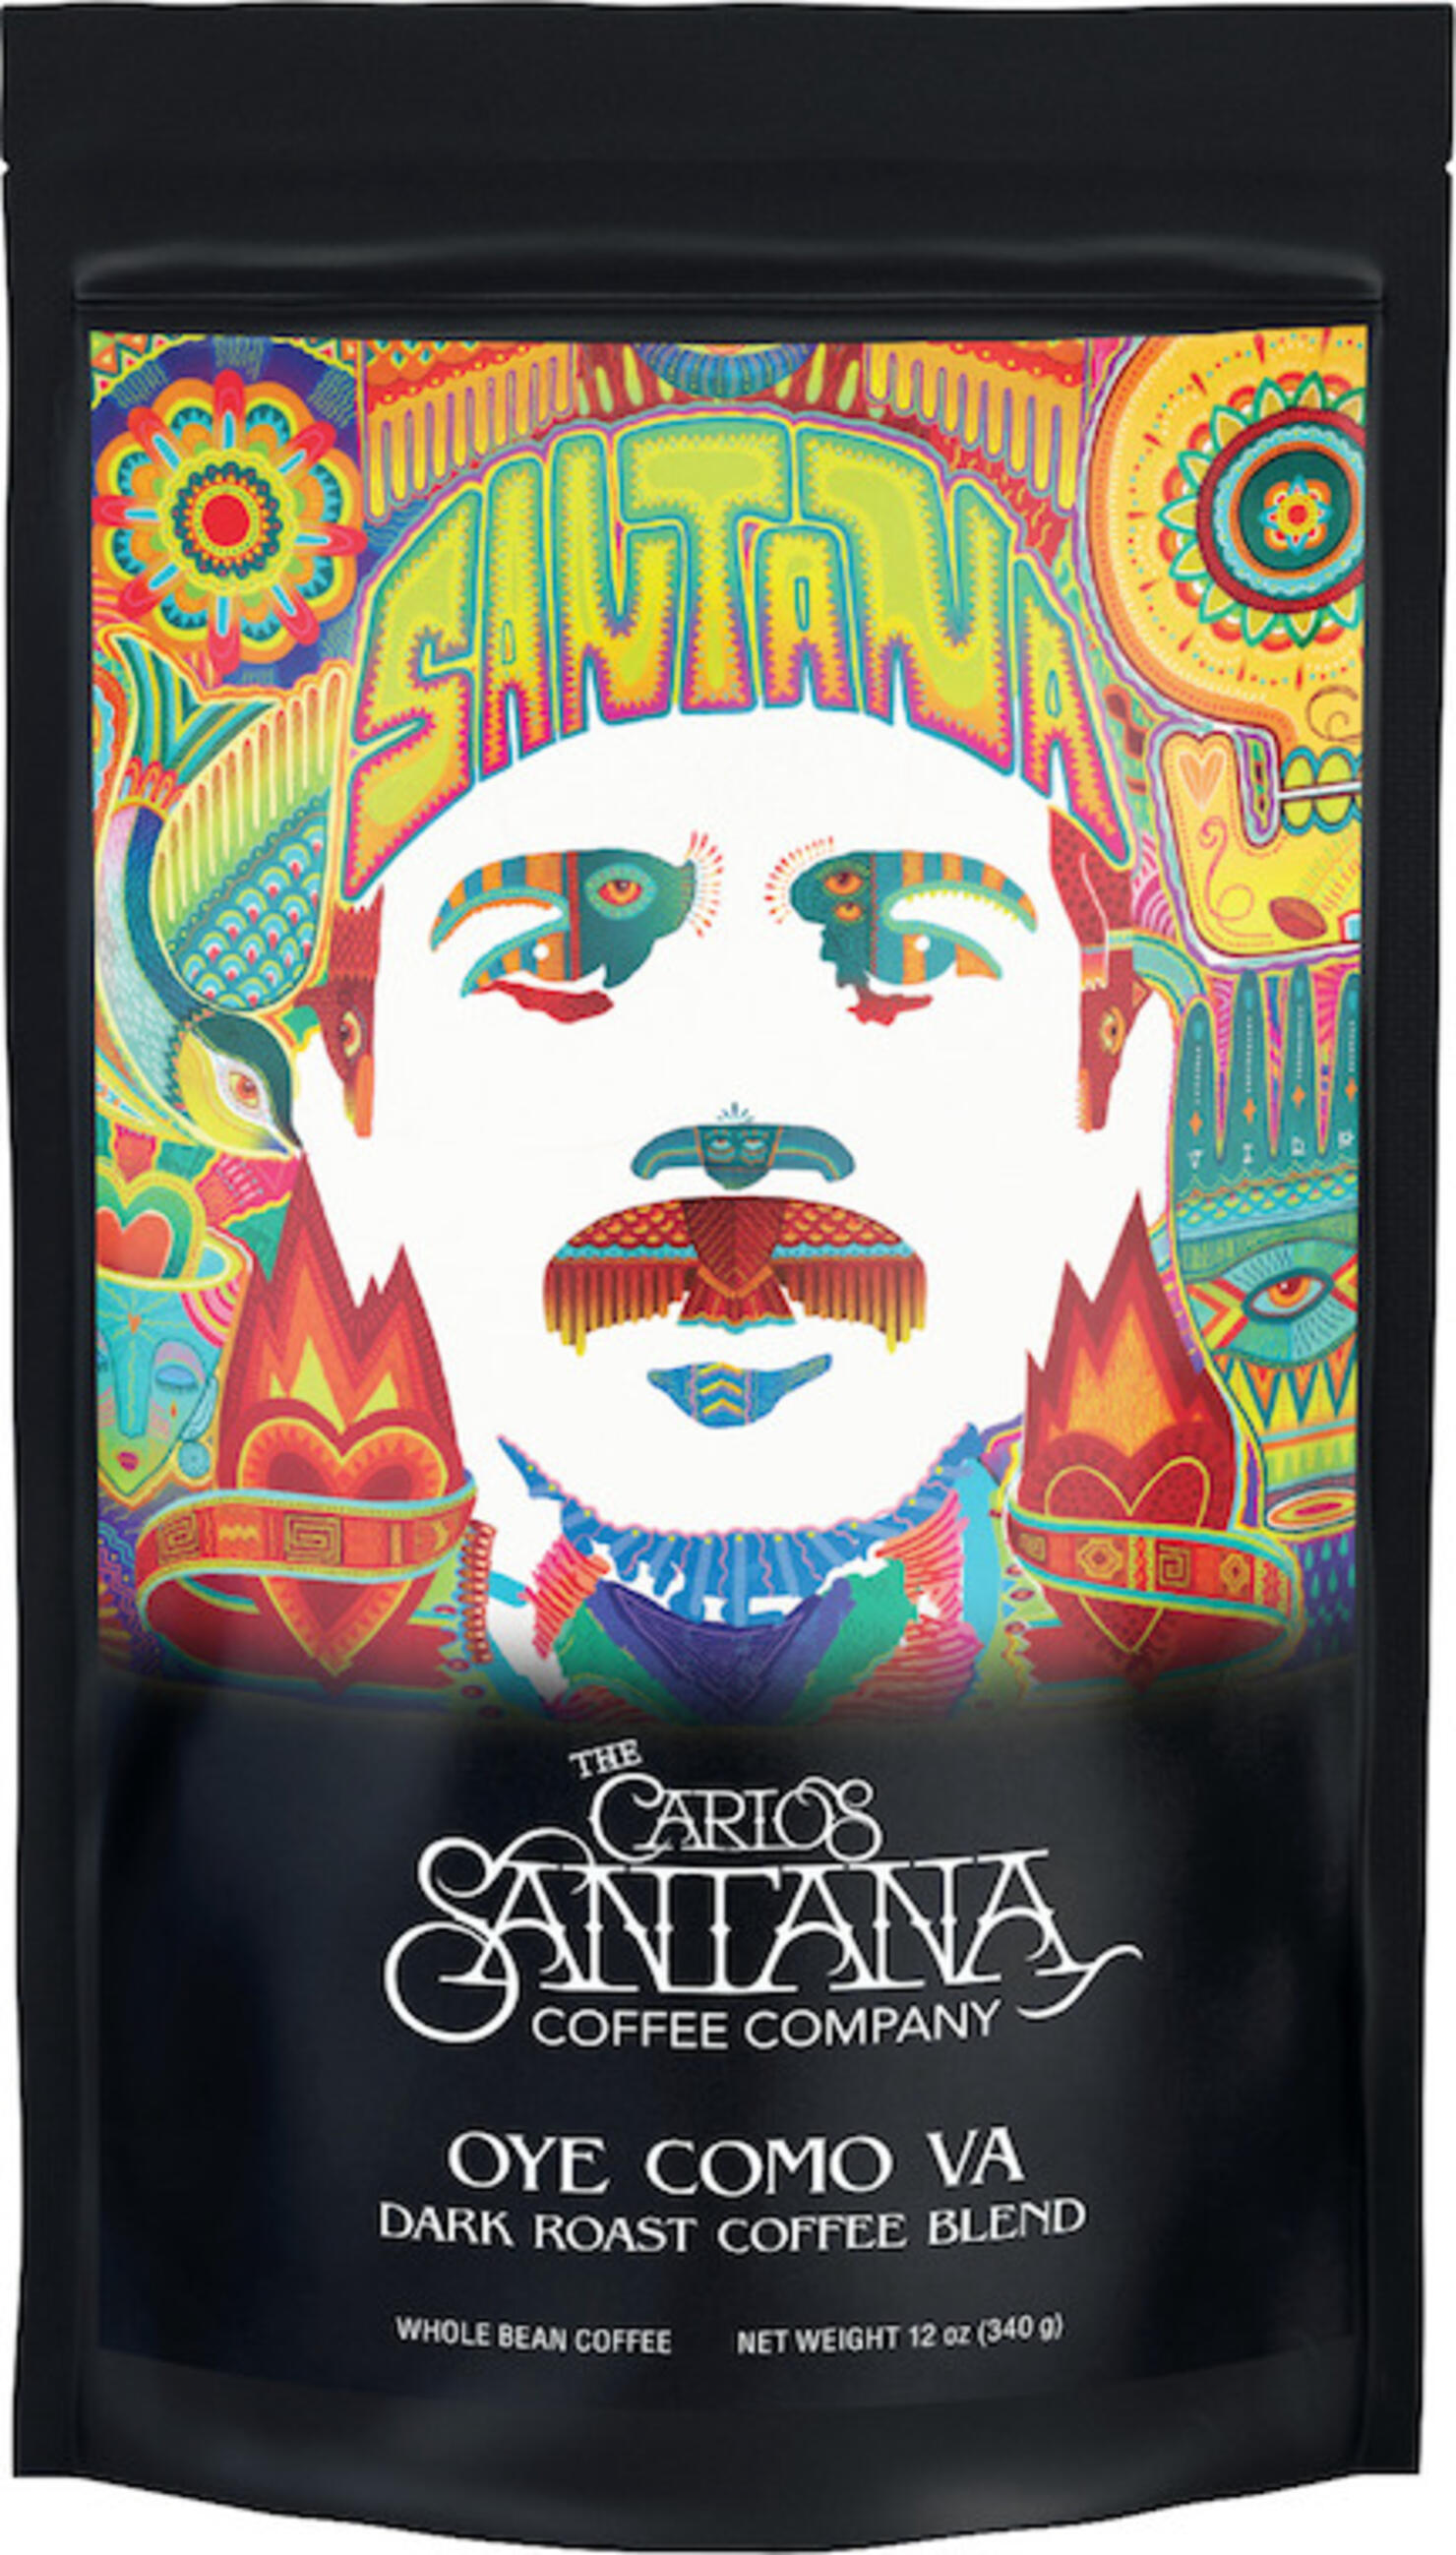 Carlos Santana Coffee